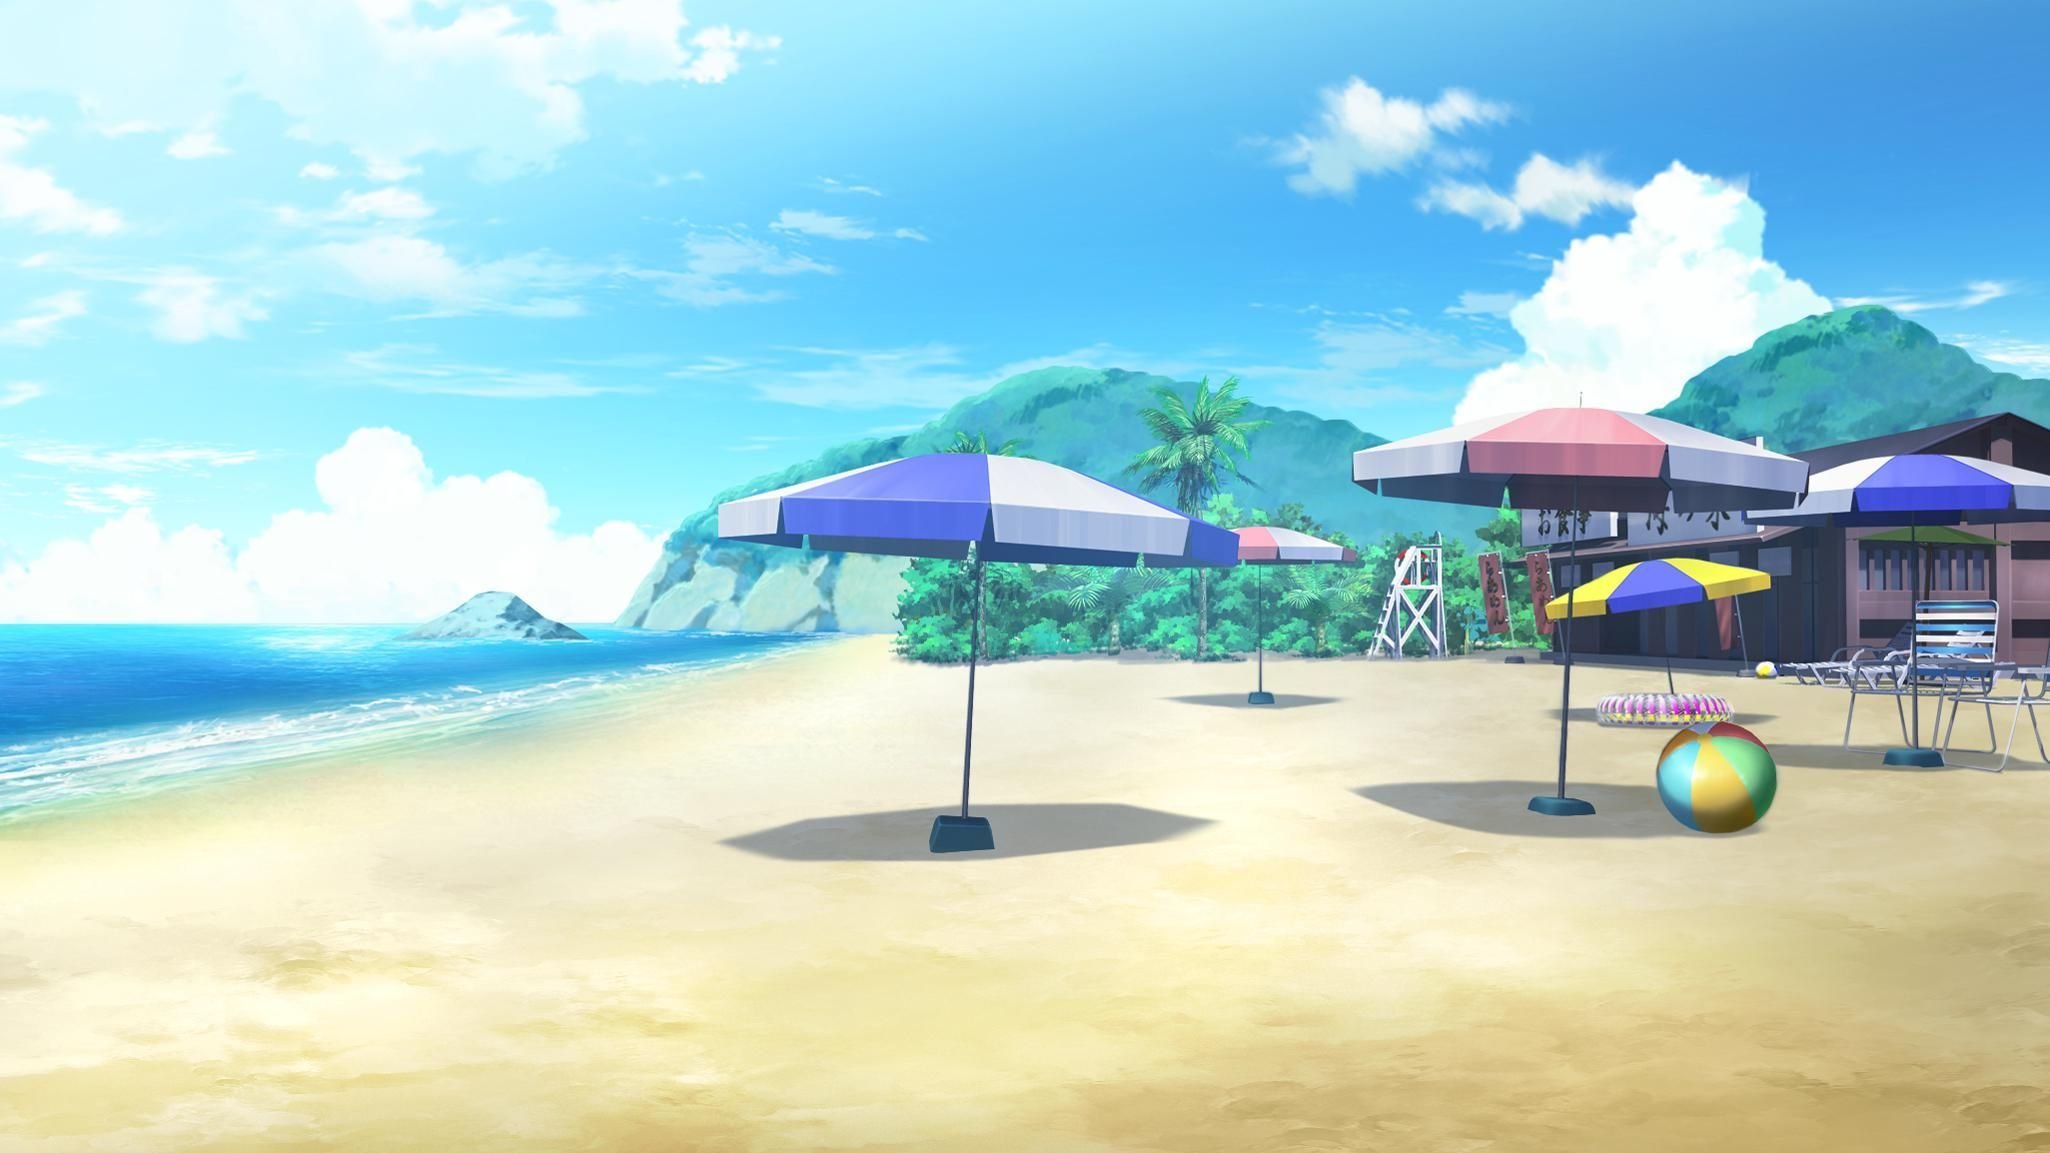 Anime Sunset Beach Images - Free Download on Freepik